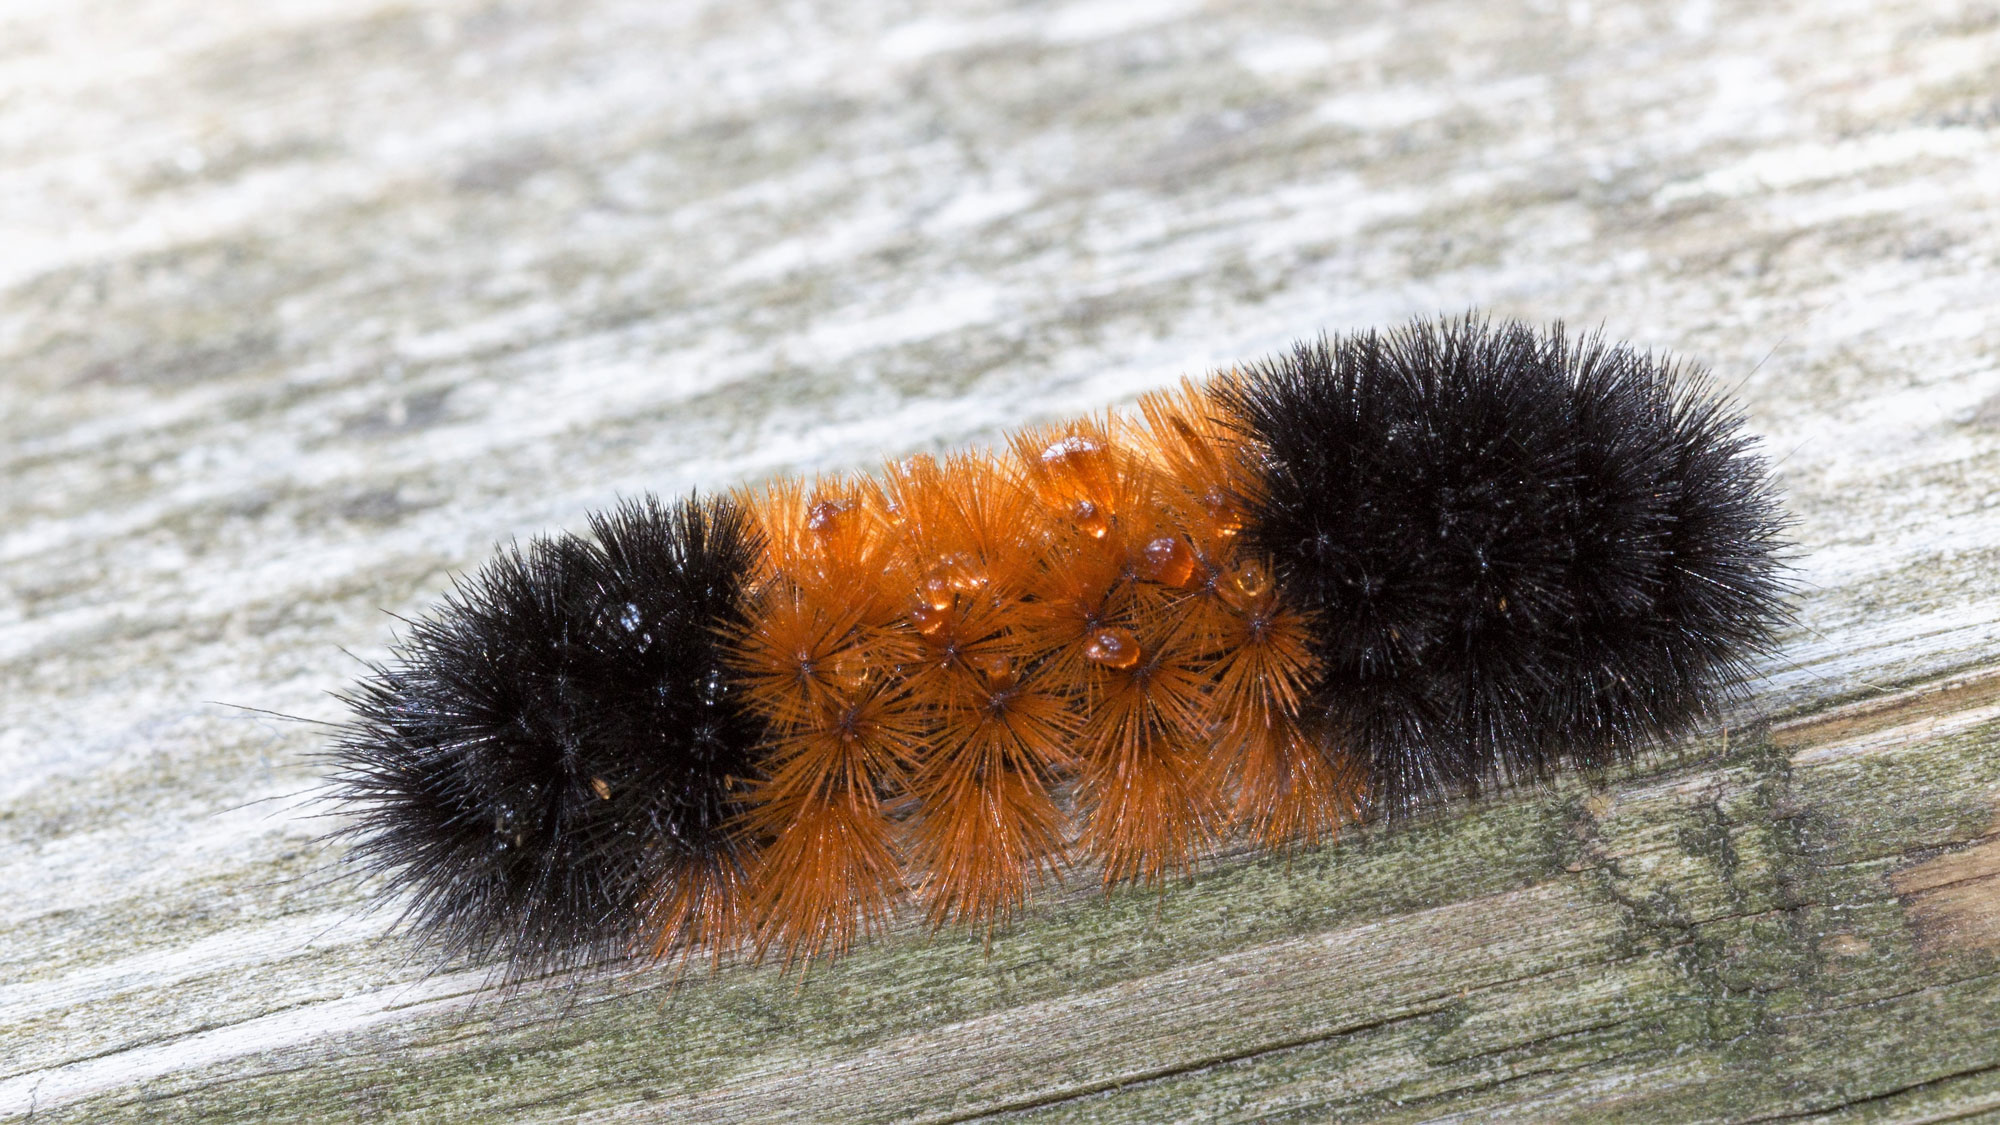 A woolly bear caterpillar on wood.